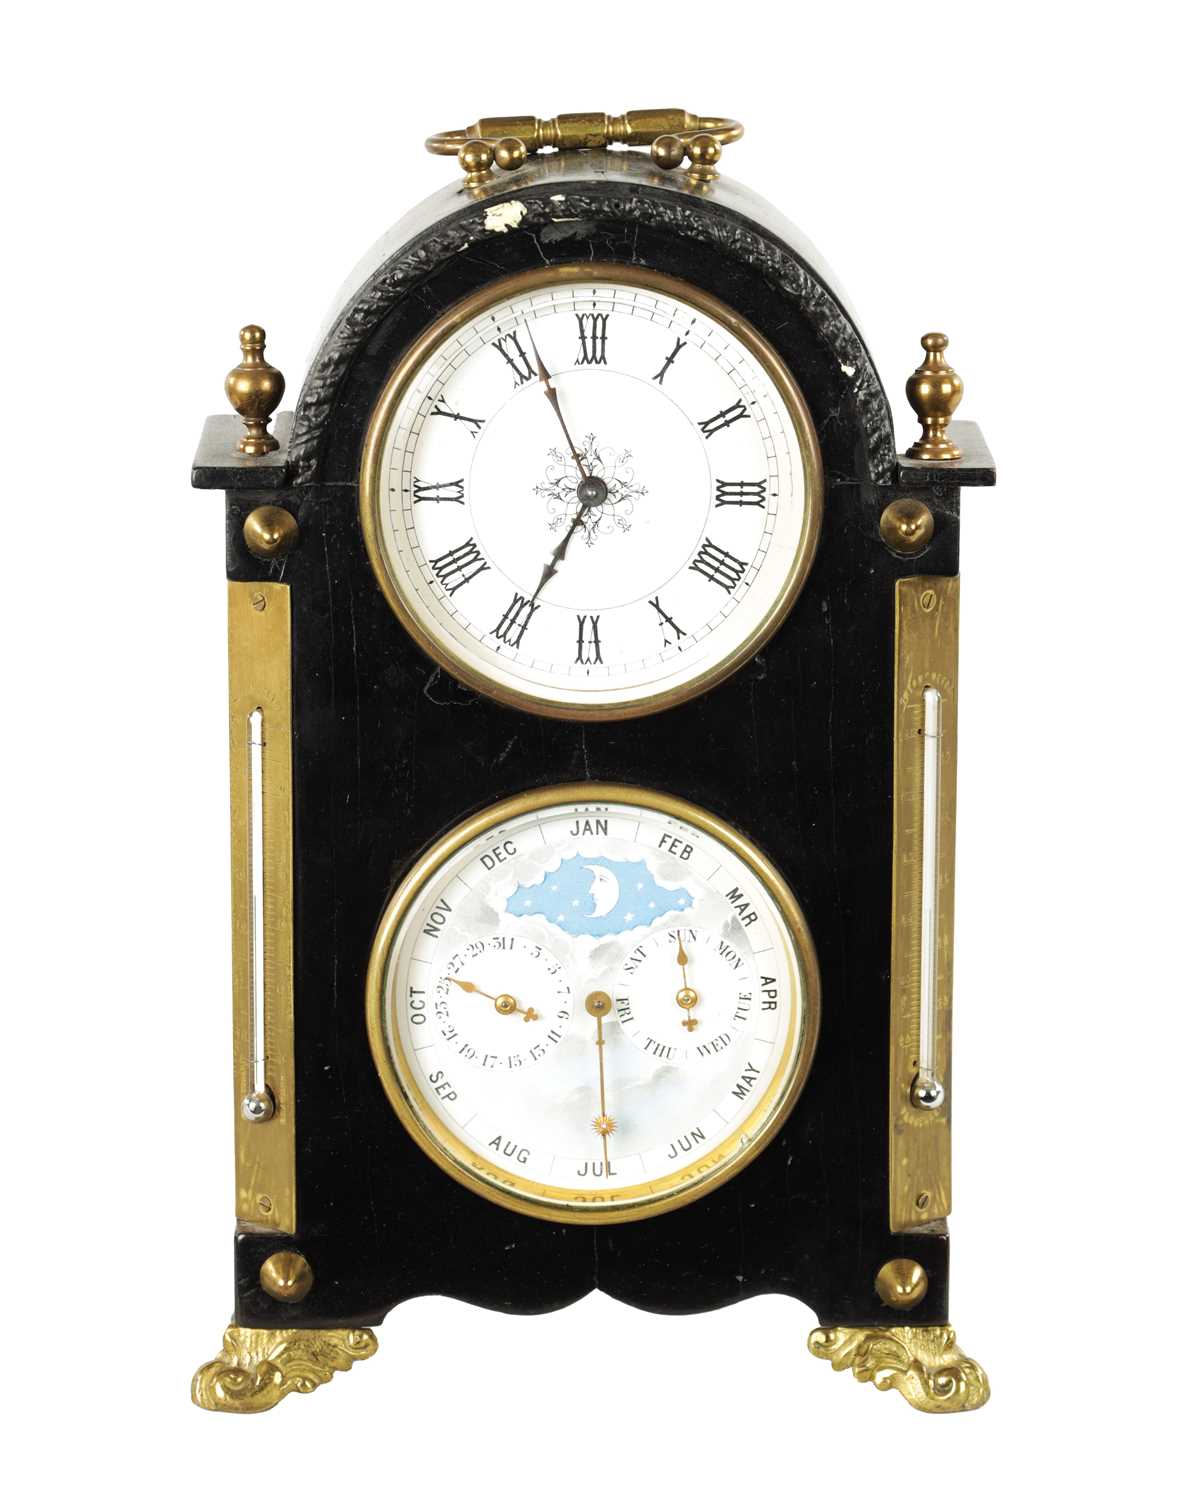 A LATE 19TH CENTURY FRENCH EBONY VENEERED MANTEL CLOCK WITH YEAR CALENDAR